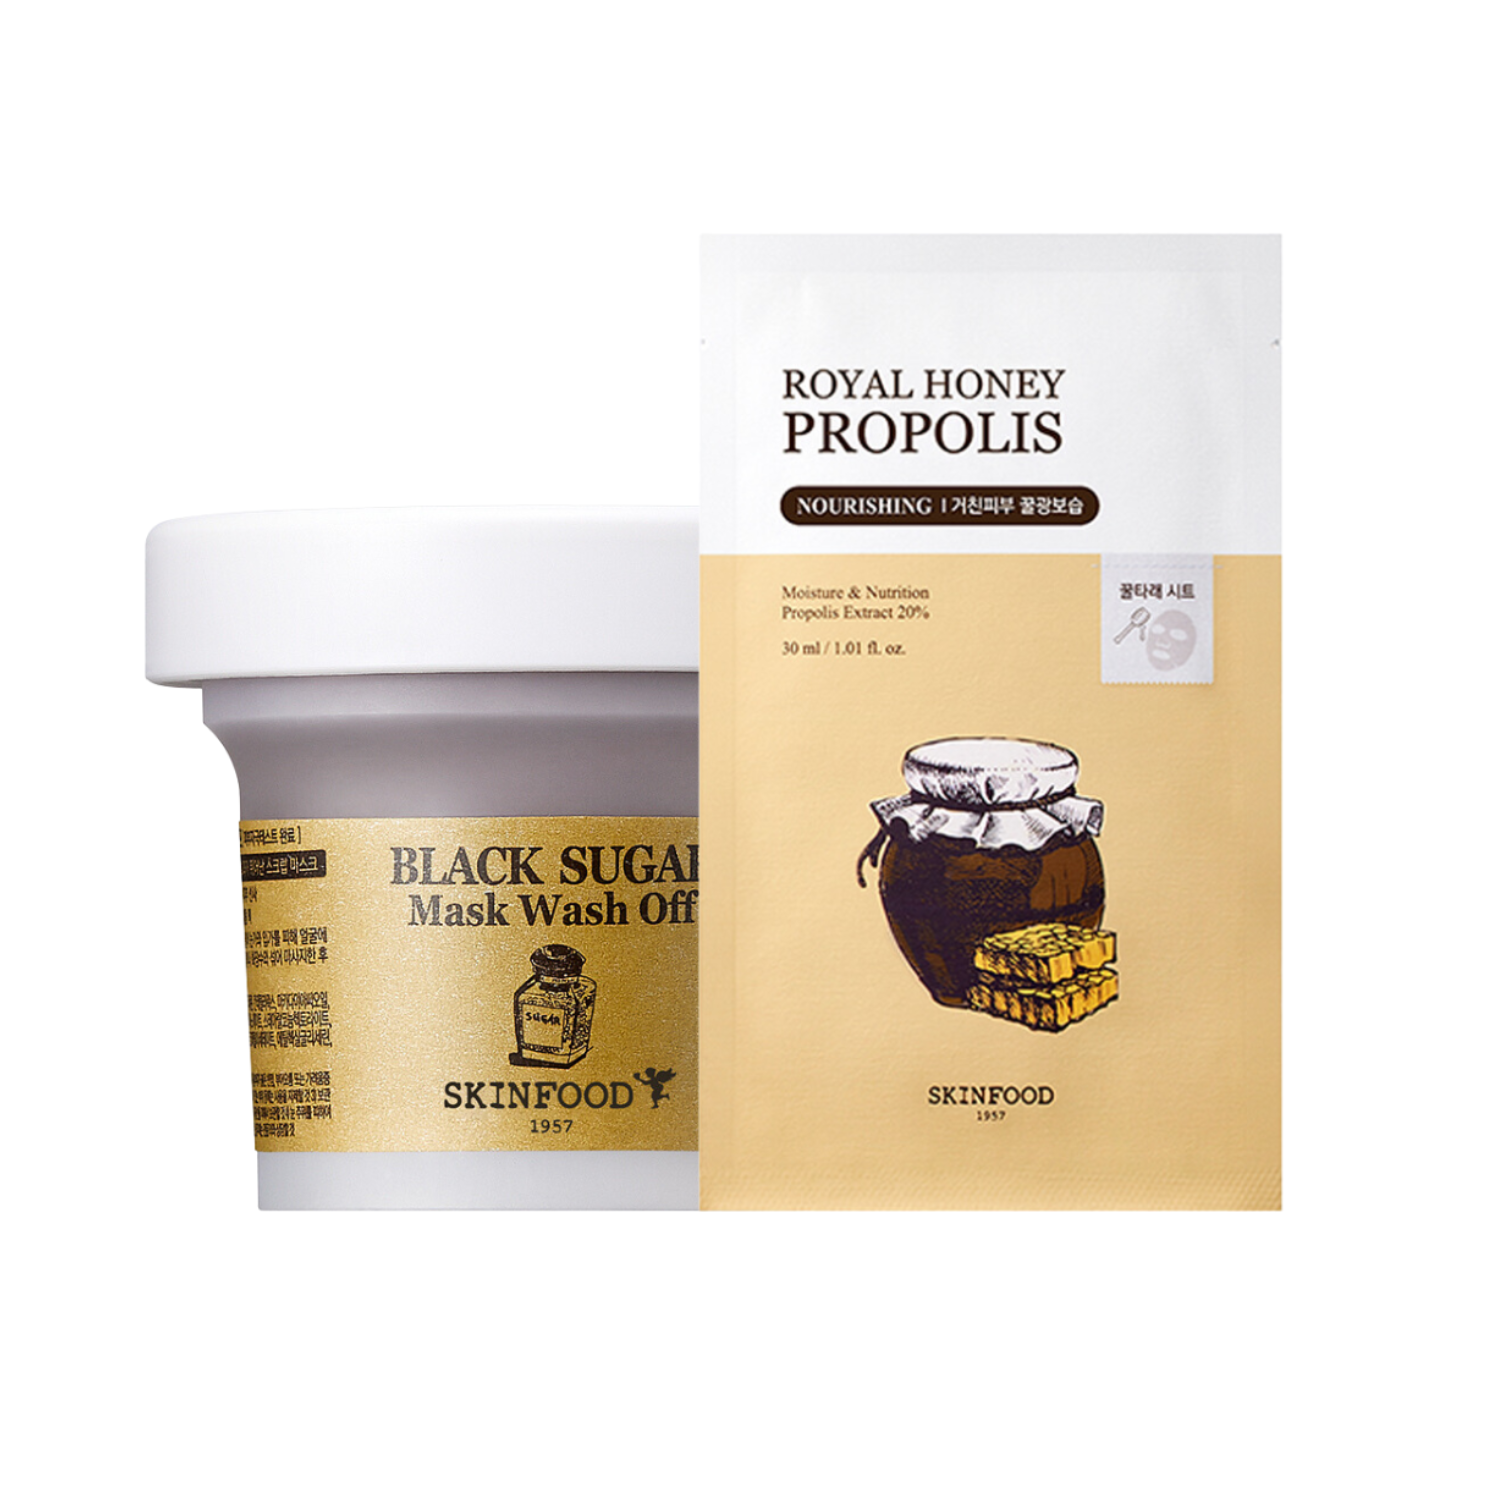 Black Sugar Mask Wash Off + Royal Honey Propolis Mask